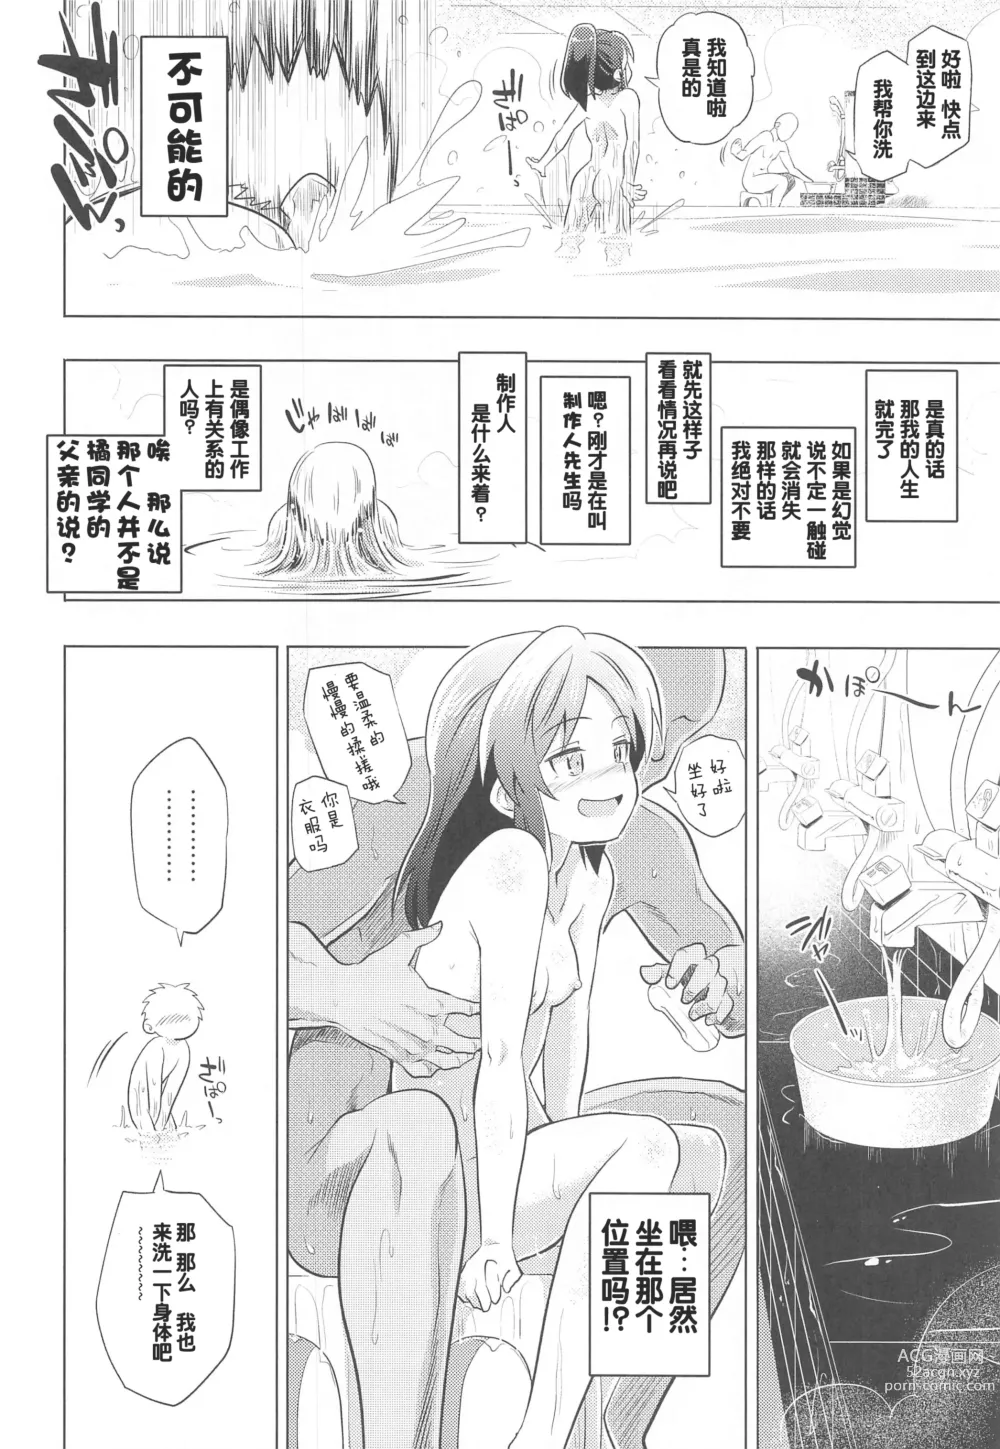 Page 9 of doujinshi 爱丽丝一起来洗澡